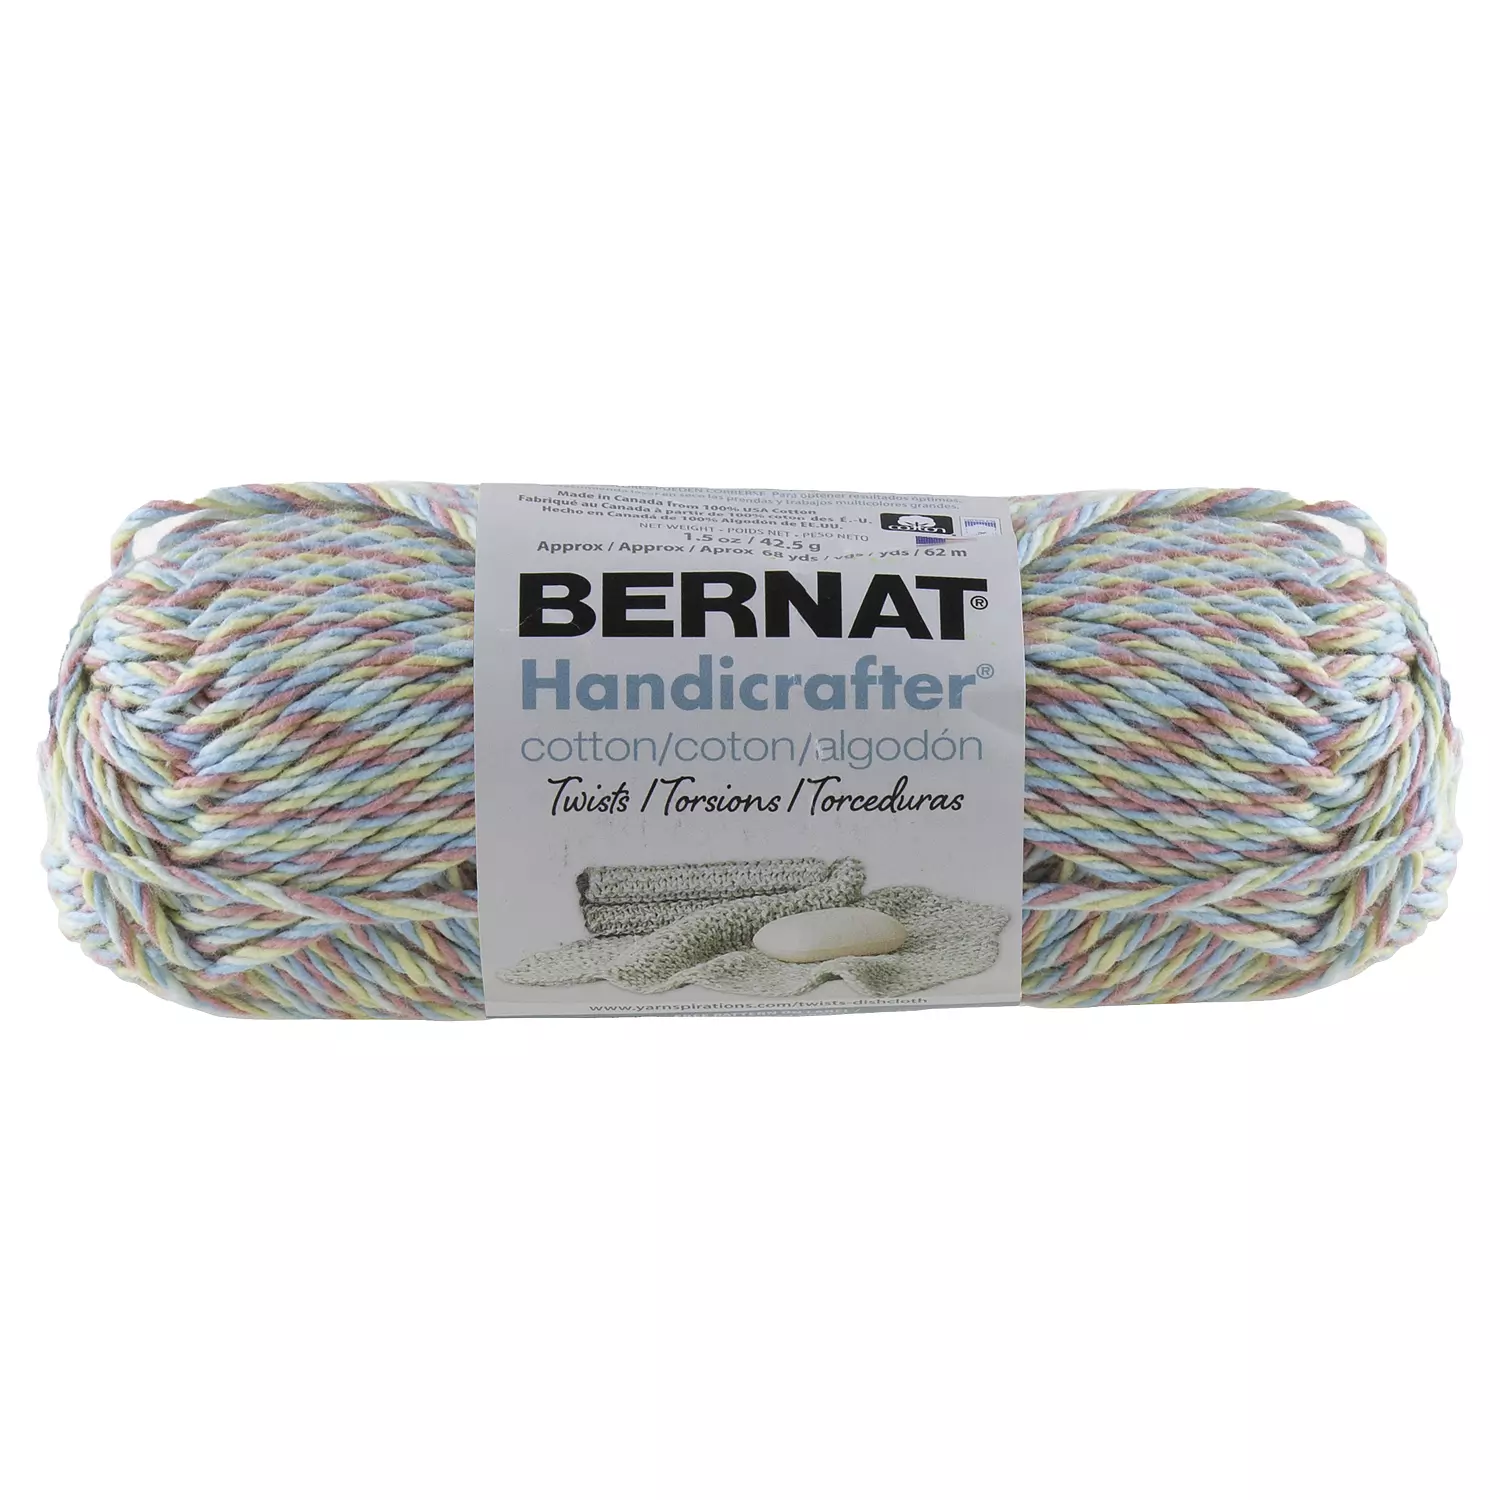 Bernat Handicrafter - Cotton yarn, candy sprinkles lighter